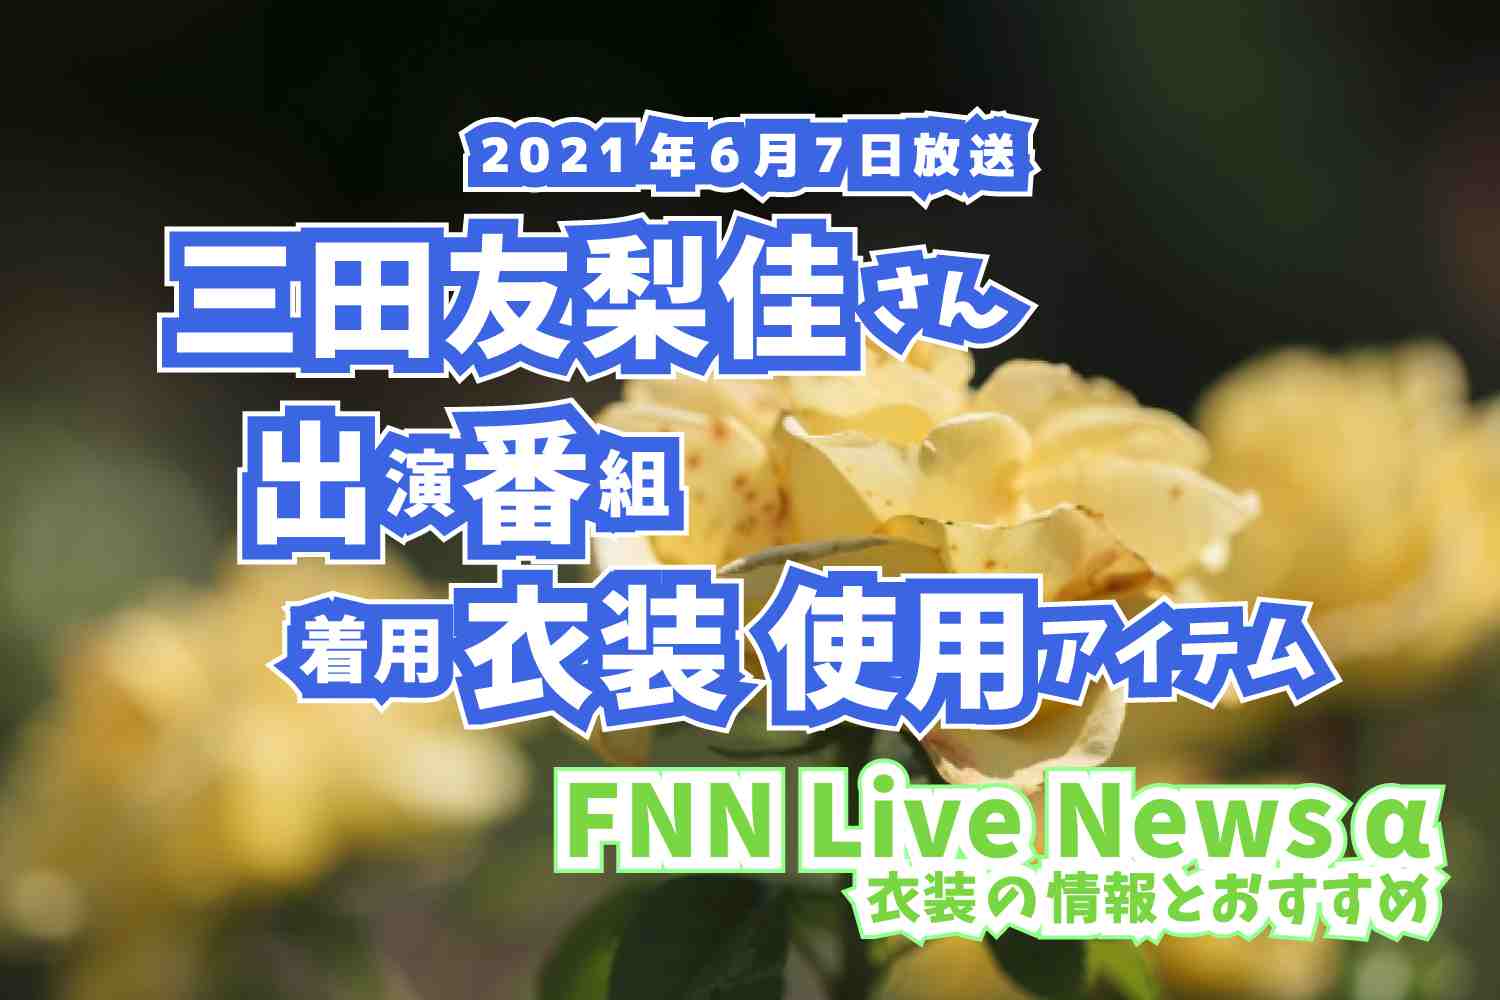 FNN Live News α　三田友梨佳さん　衣装　2021年6月7日放送